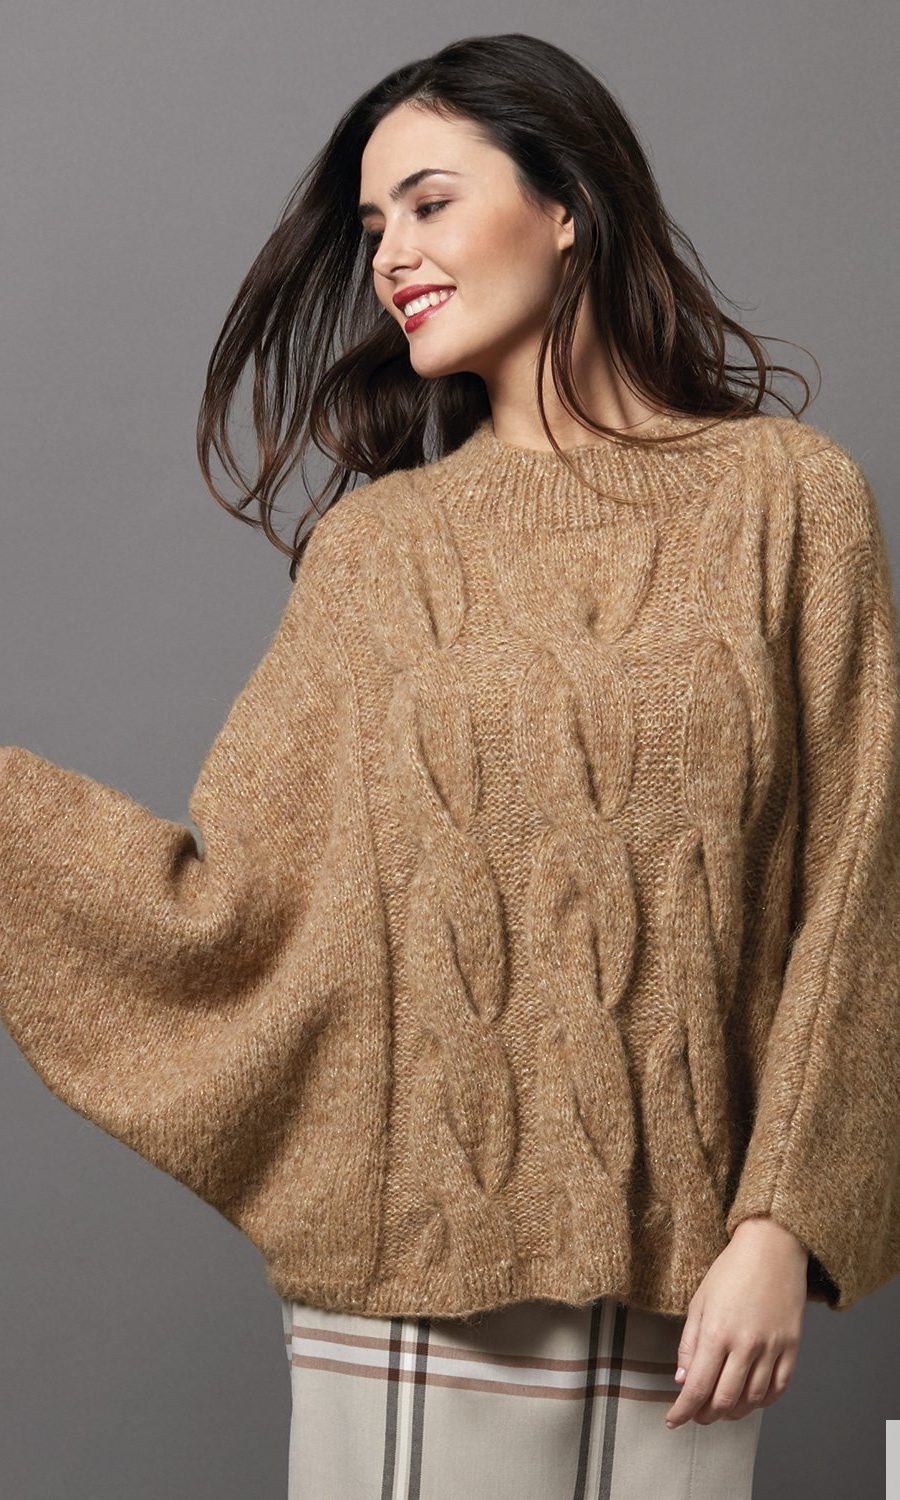 pattern-knit-crochet-woman-sweater-autumn-winter-katia-6136-39-g